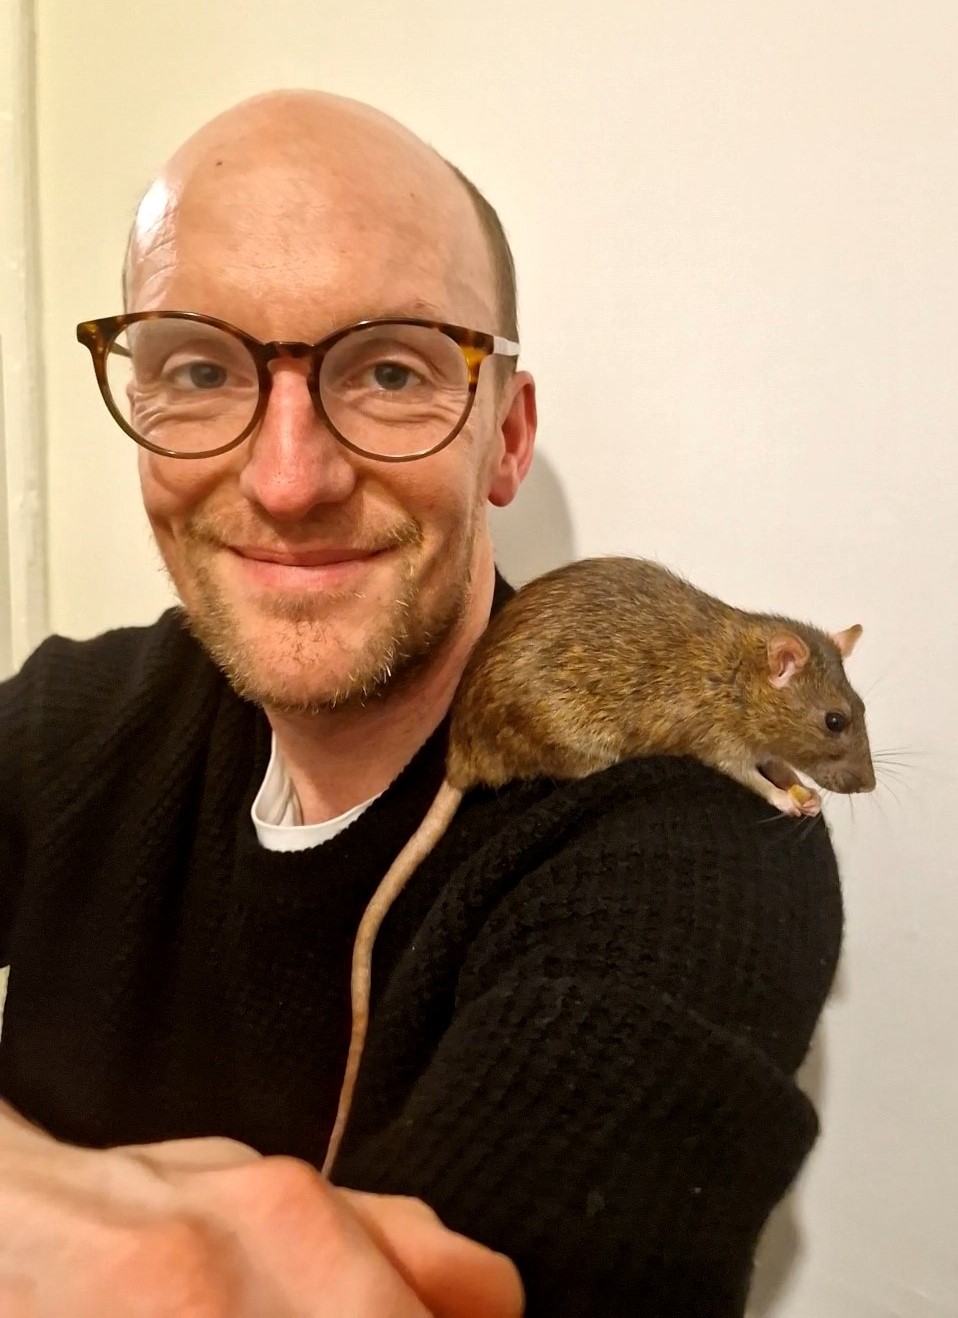 Joe Shute with his brown rat on his shoulder.